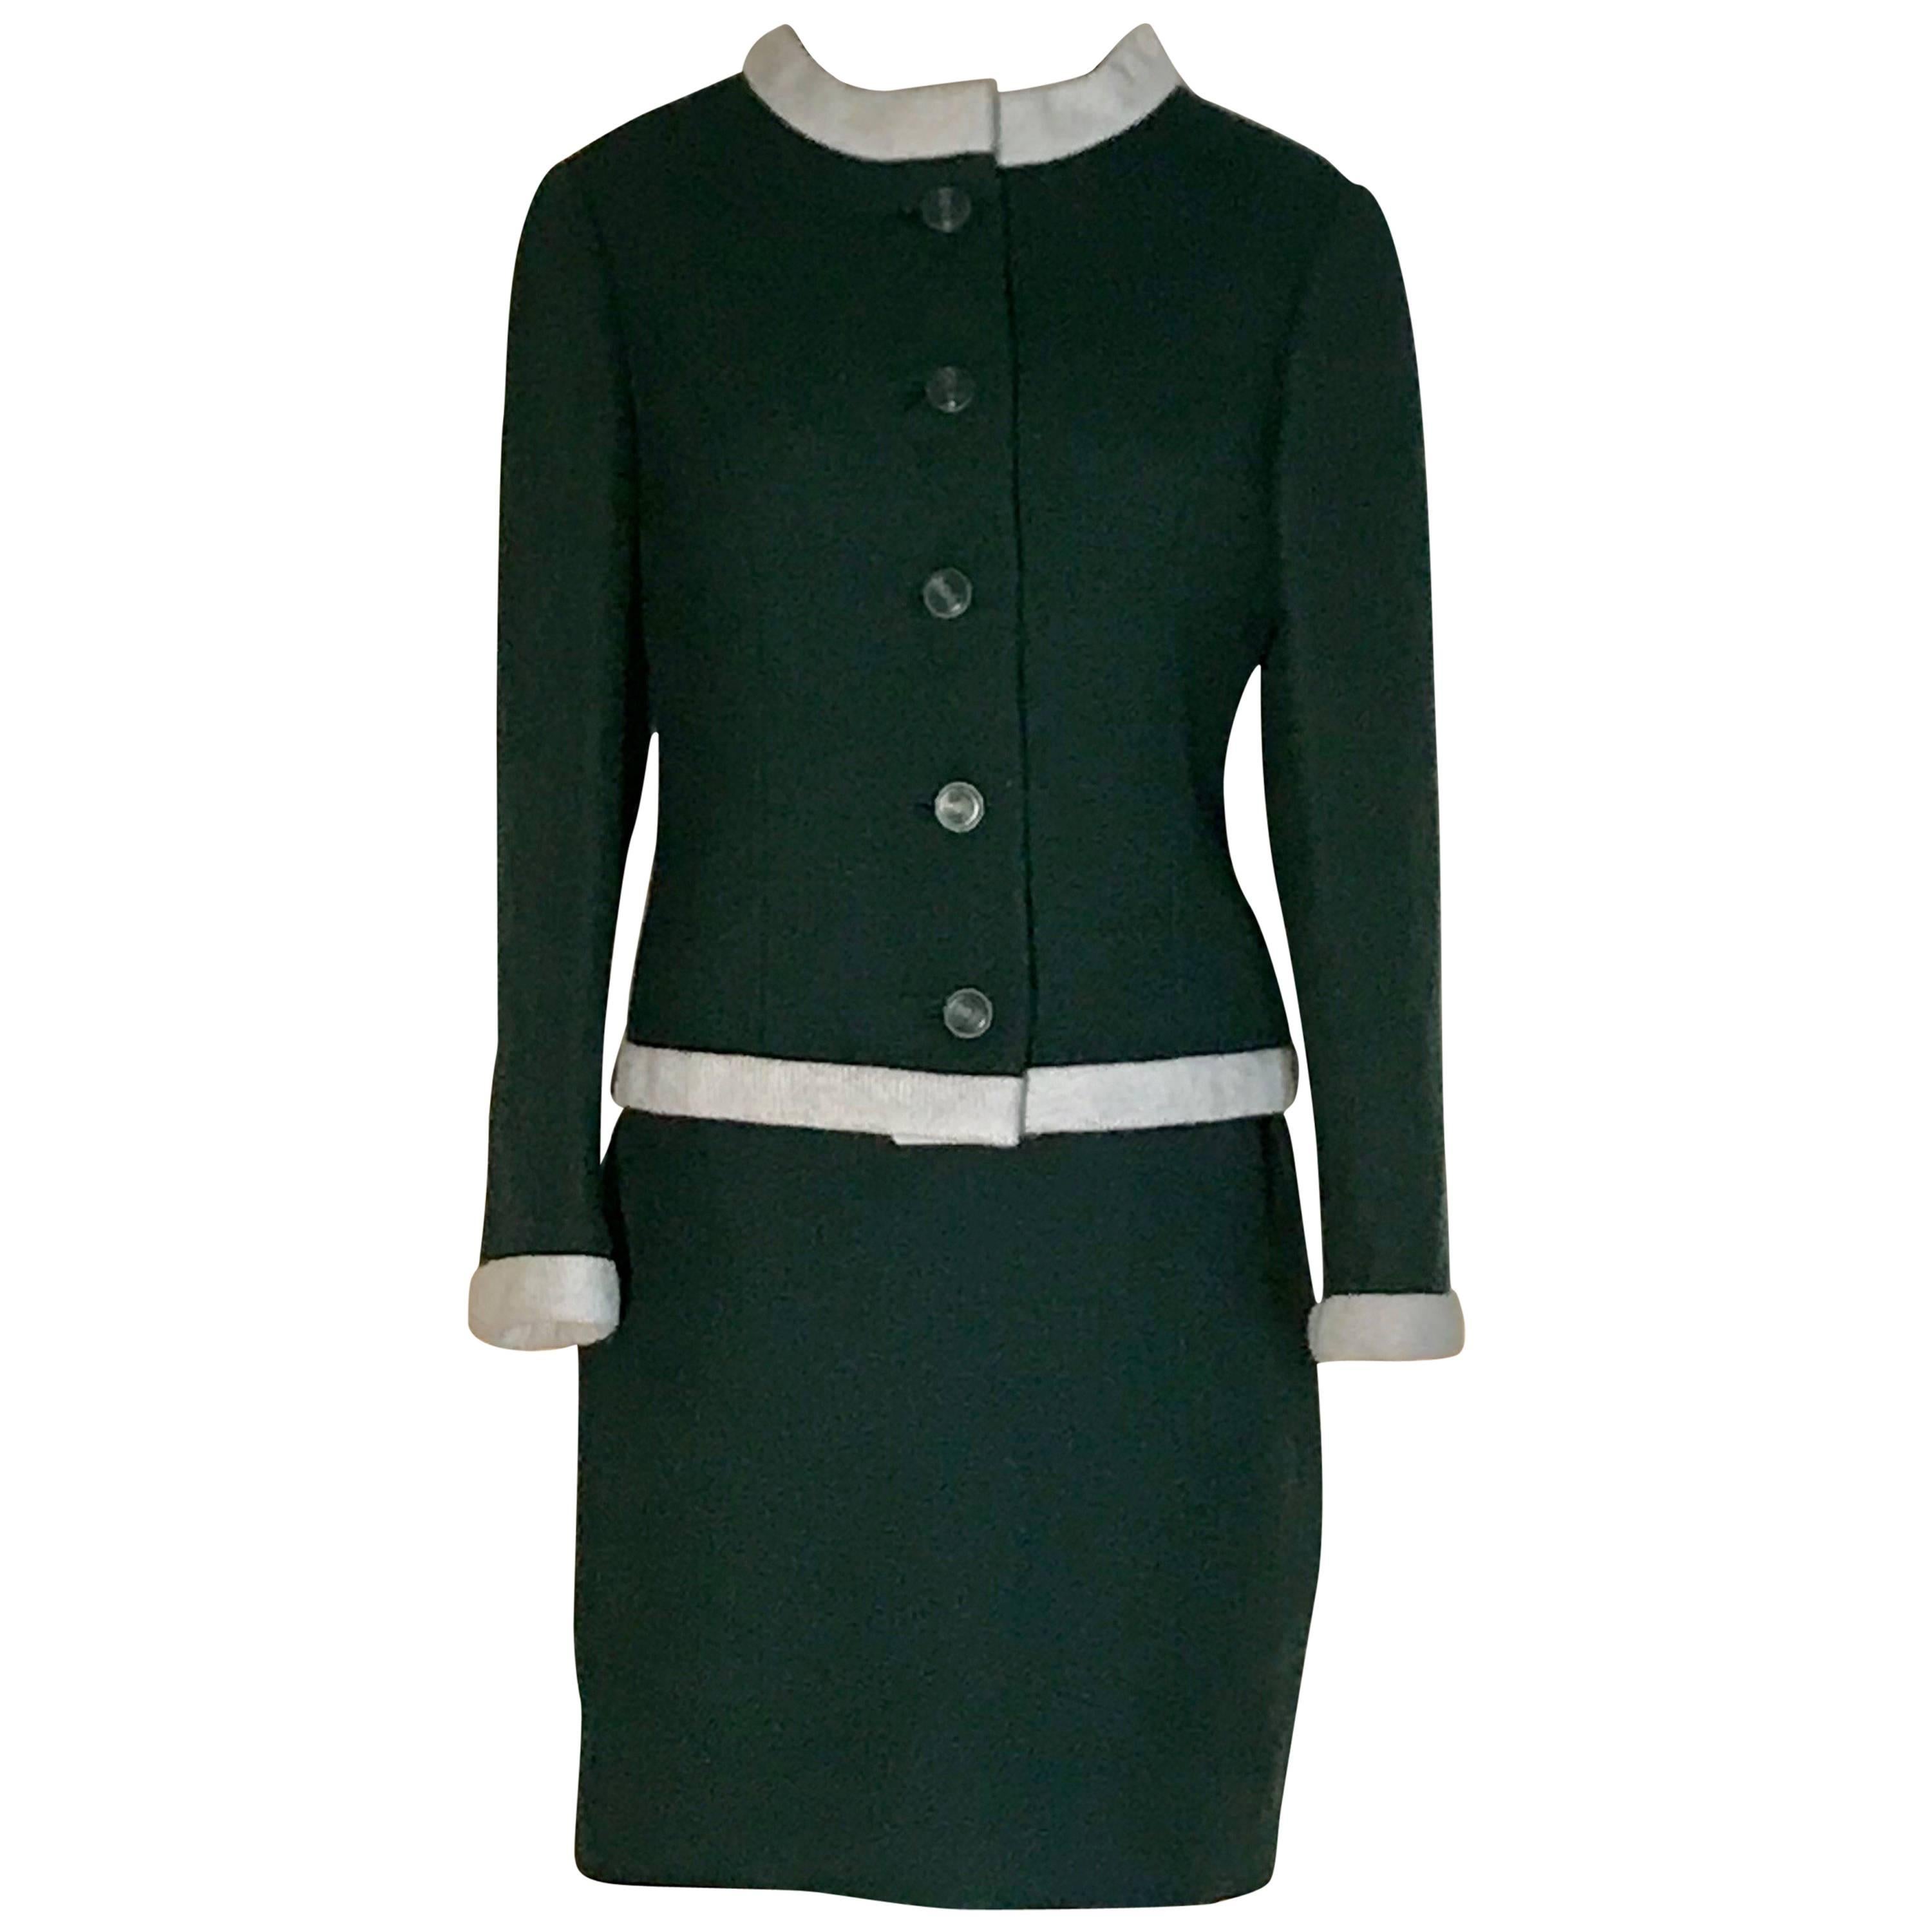 Jacques Heim Jeannes Filles for Bonwit Teller Forest Green Skirt Suit, 1960s  